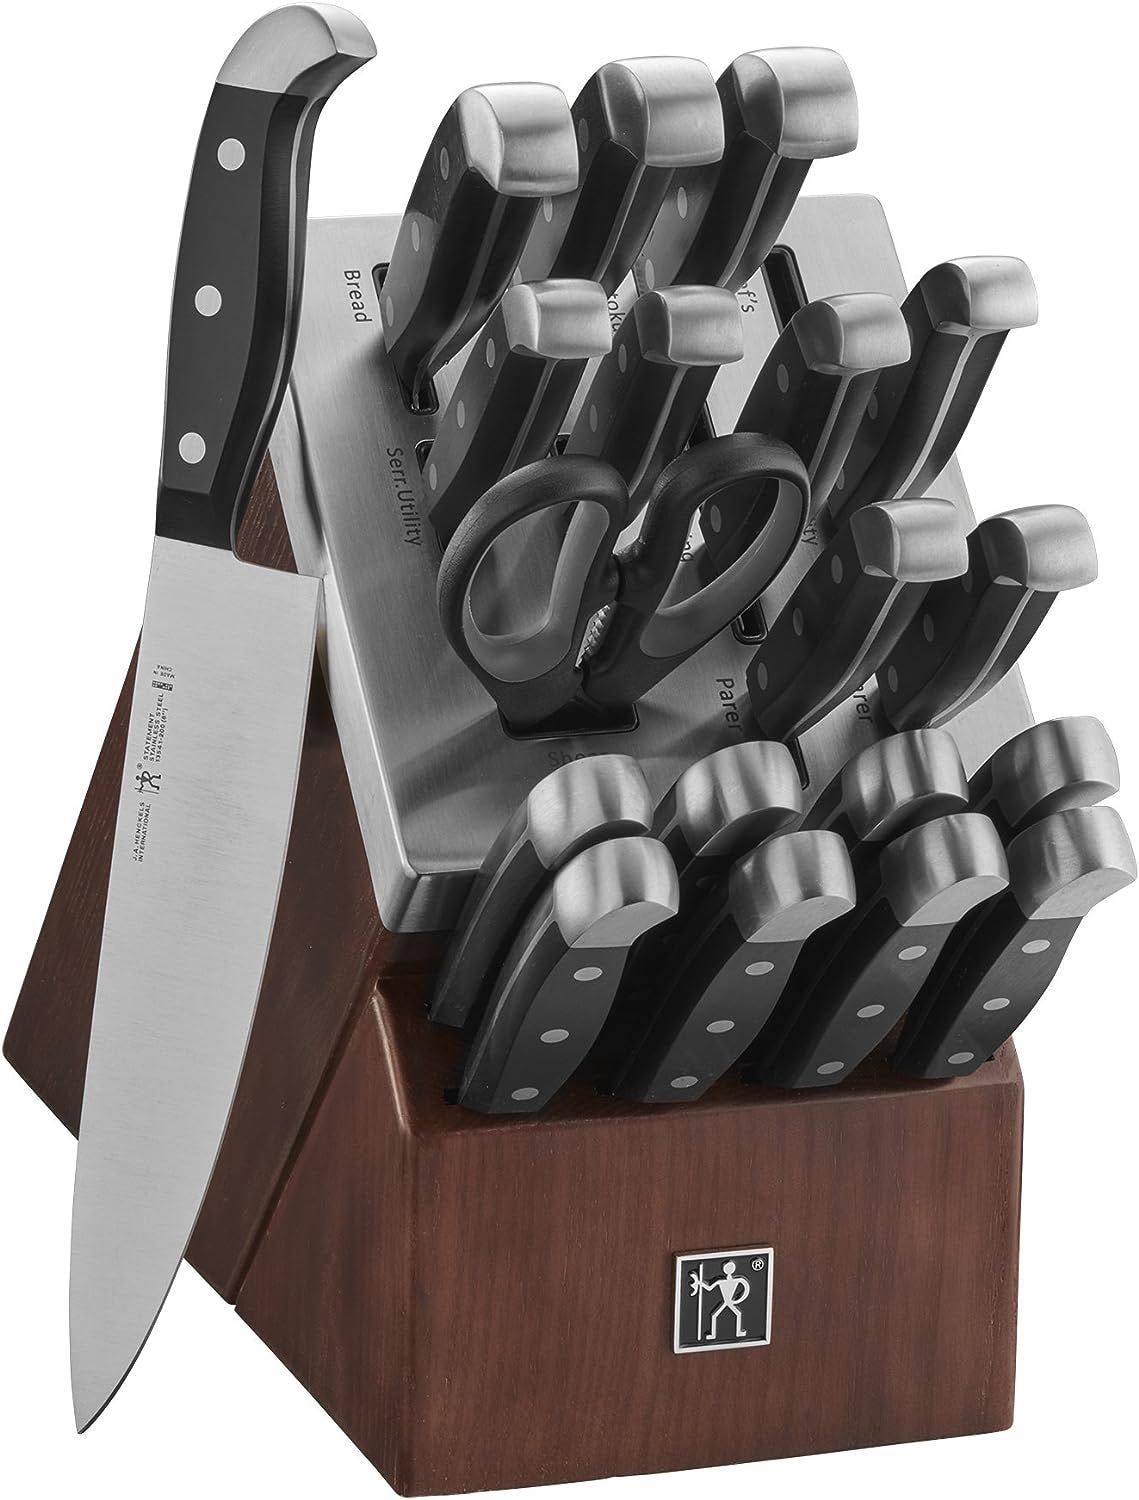 Charmline Smart Knife Cutting Board, Chopping Board Kitchen Tools